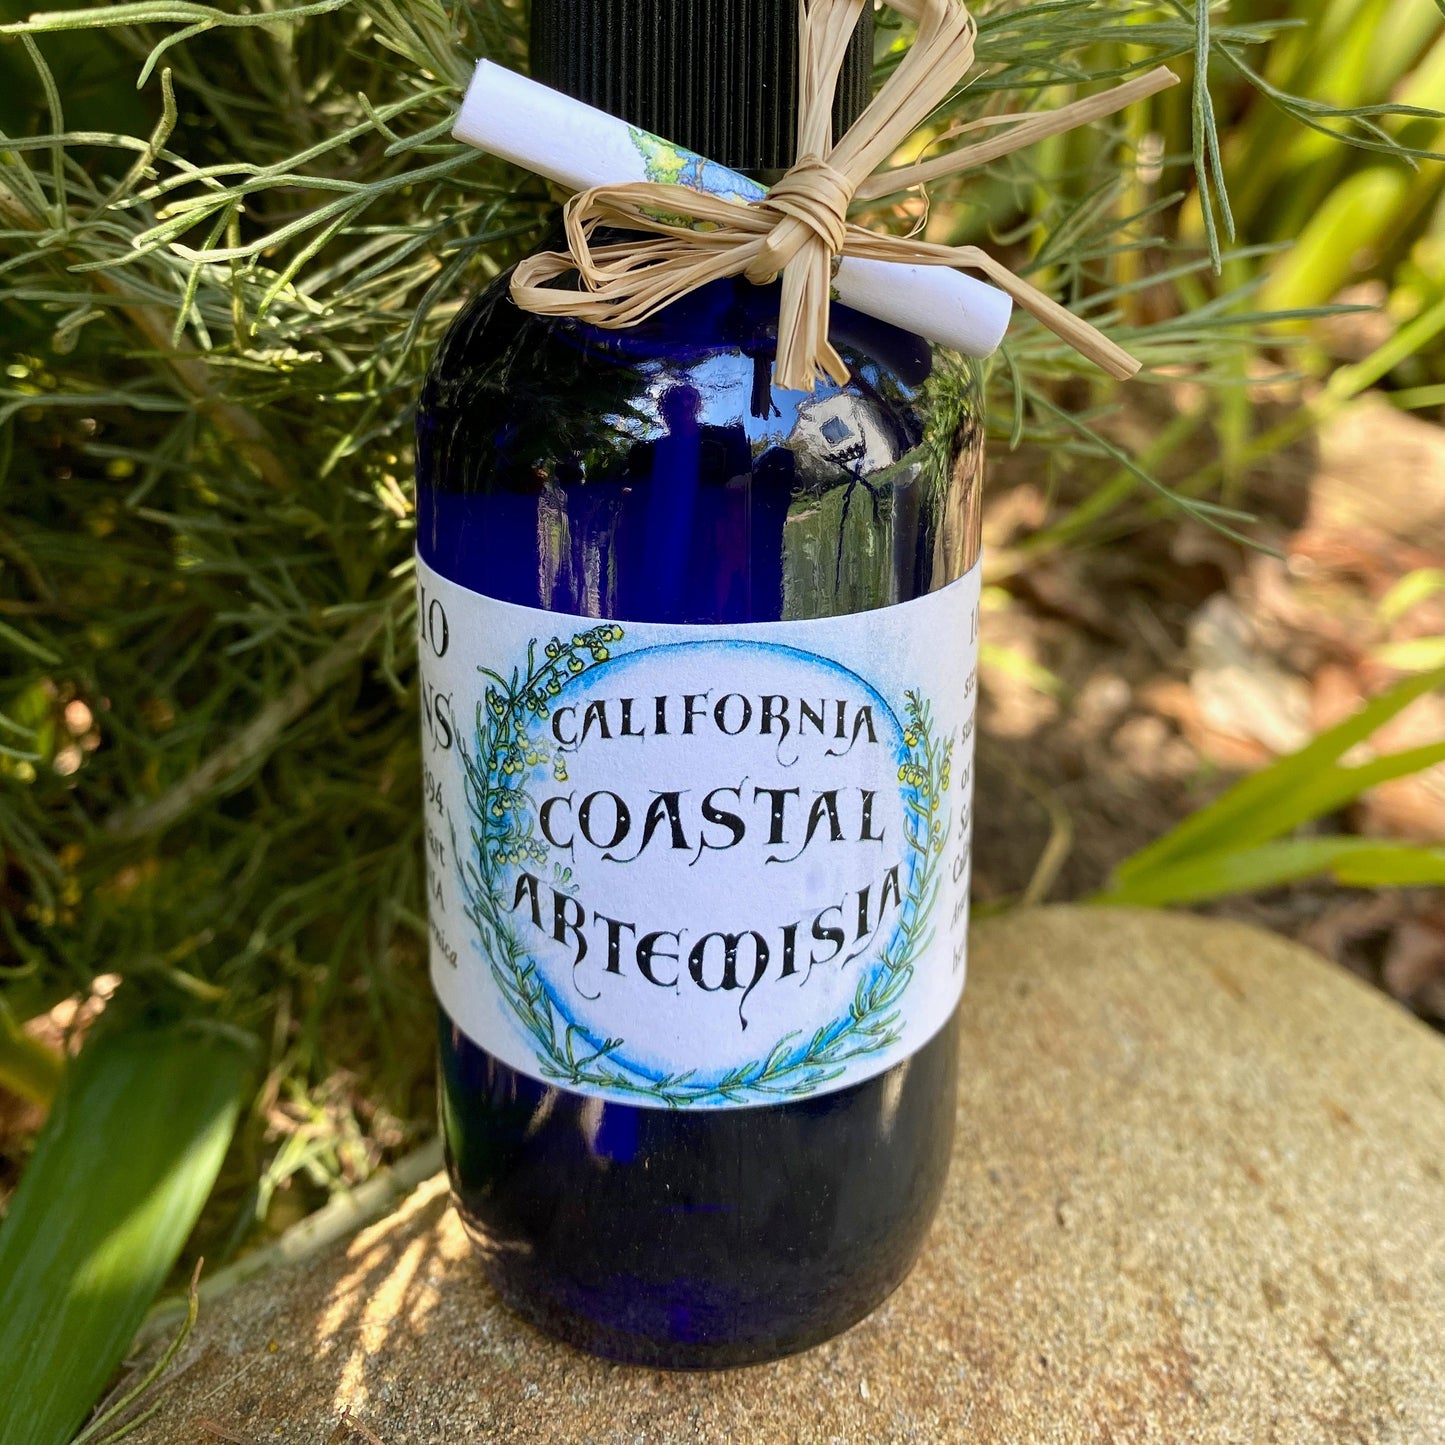 California Coastal Artemisia Hydrosol Bottle in 4 oz cobalt blue glass with sagebrush plant in background